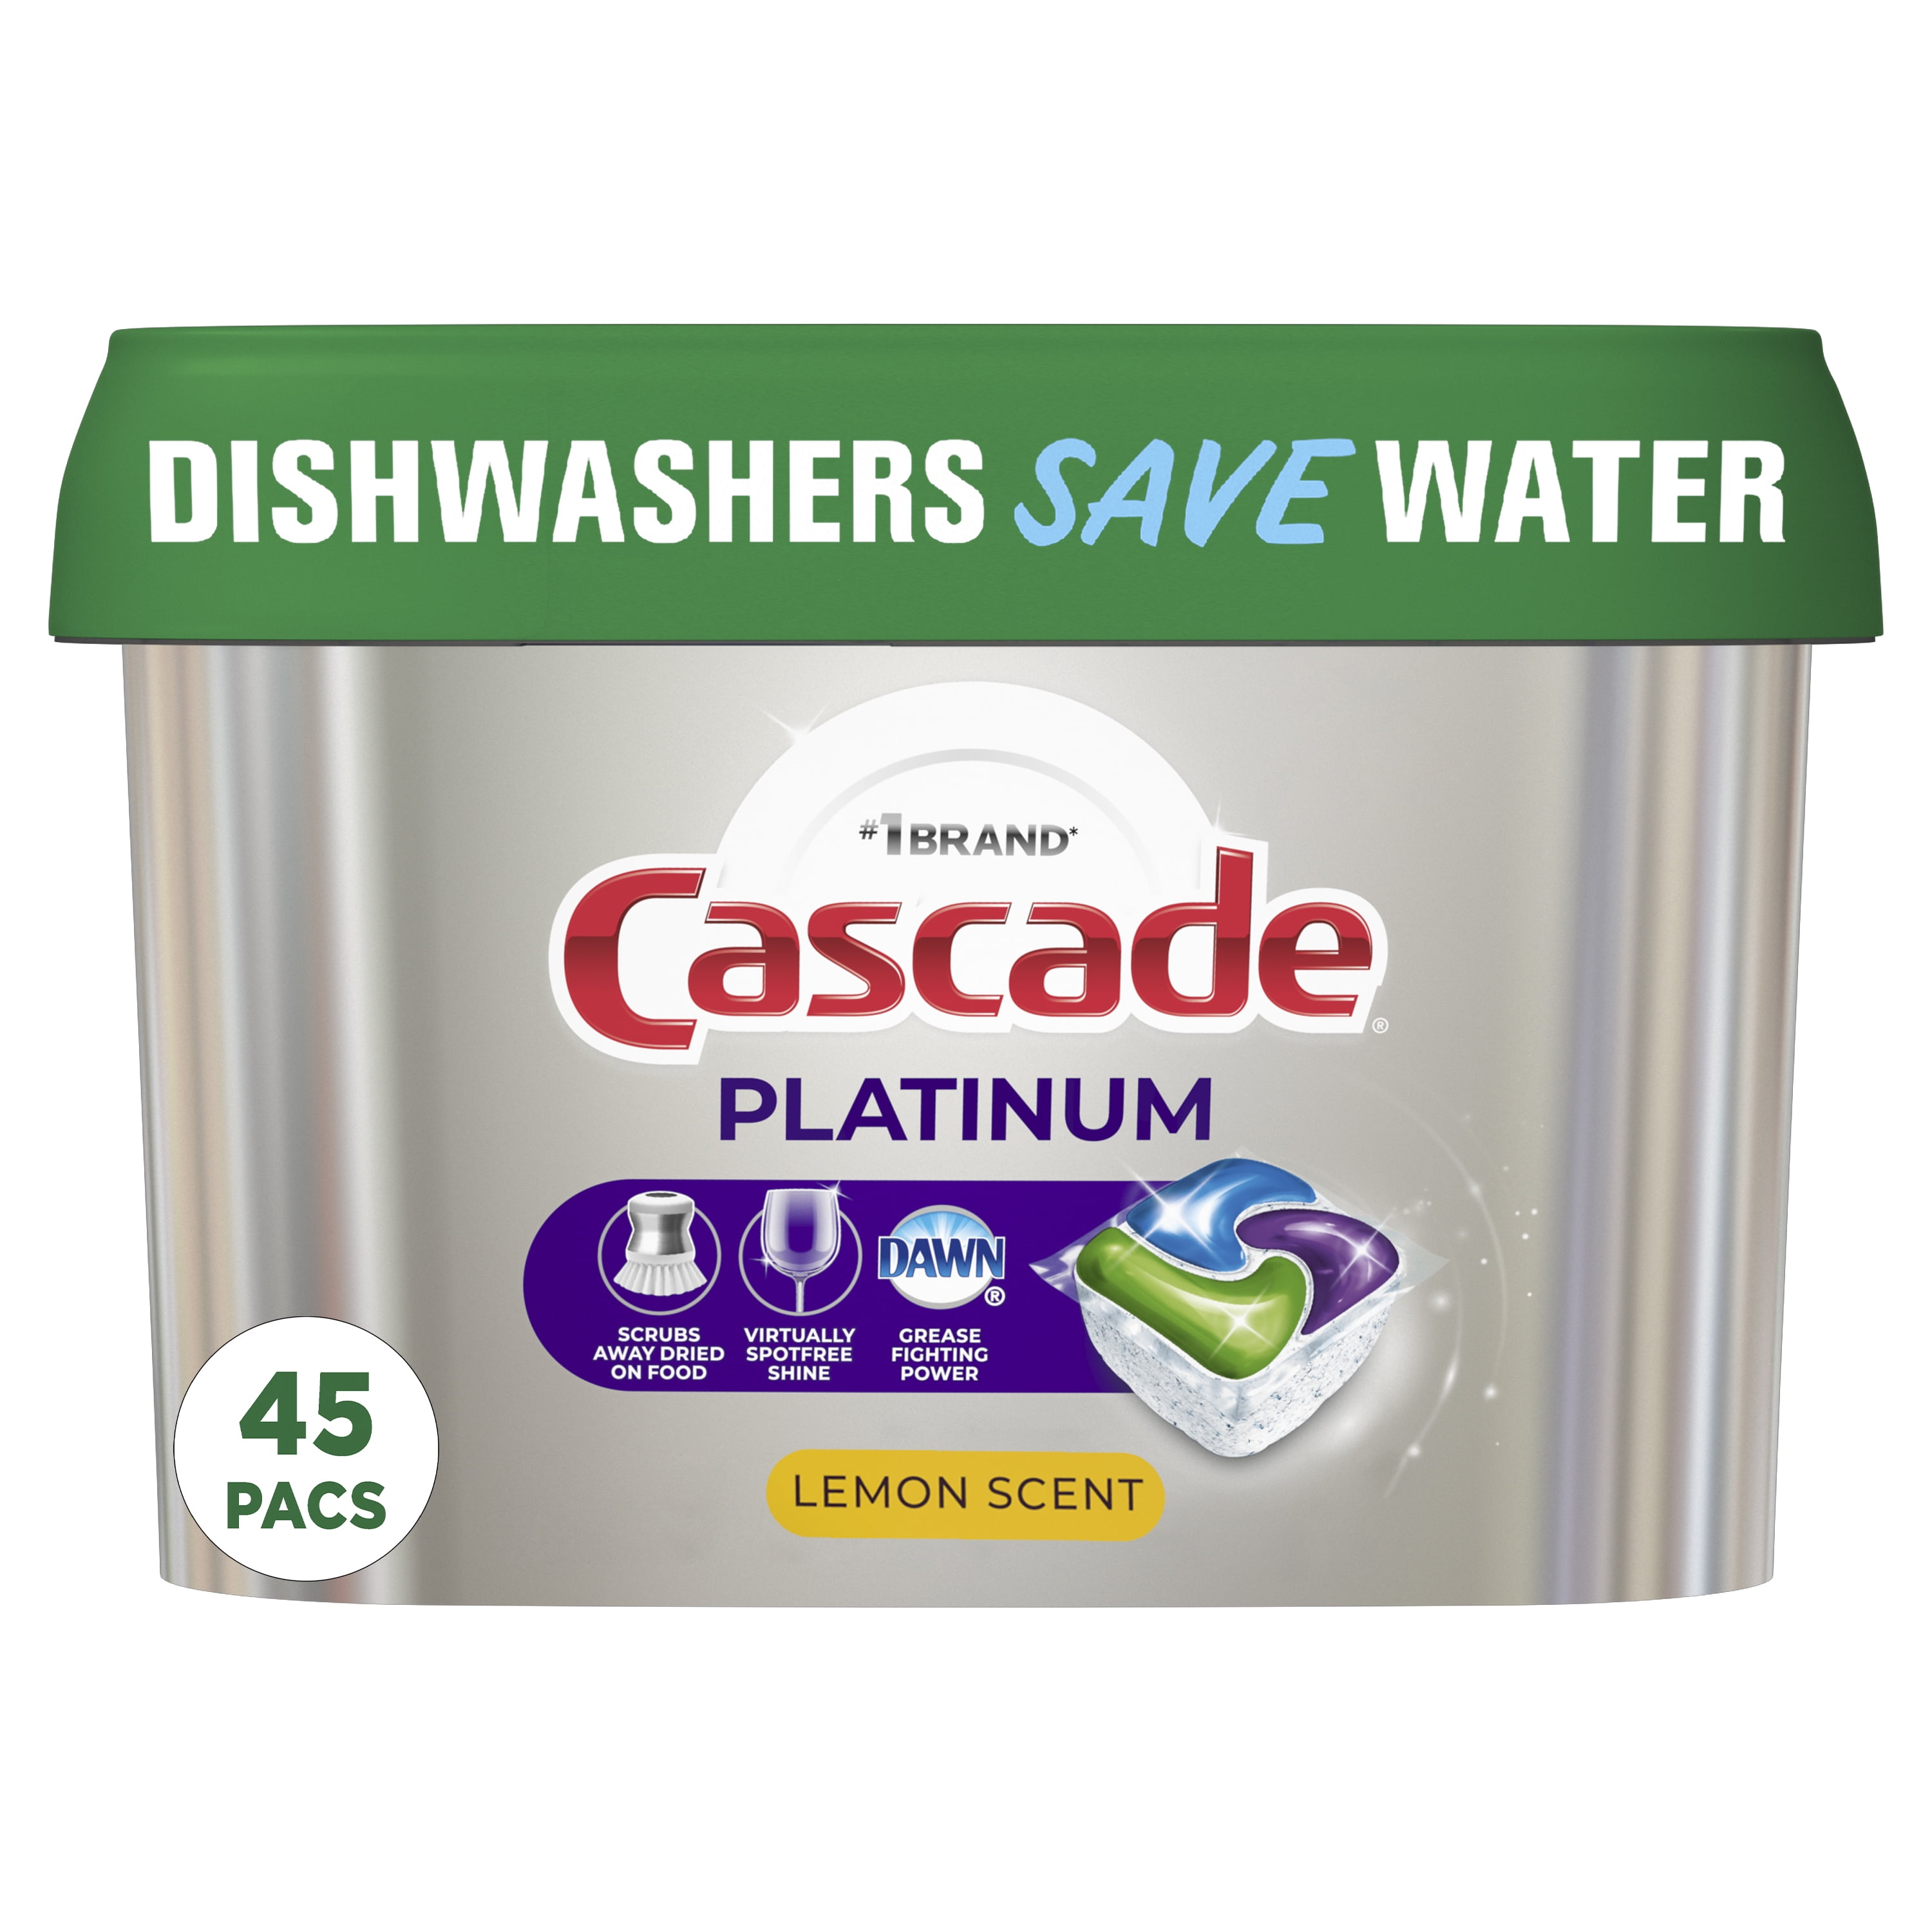 Best Cascade Complete; Dishwasher Pods 85 Count(walmart Has Cascade  Complete 45count For $45+) for sale in Deland, Florida for 2023